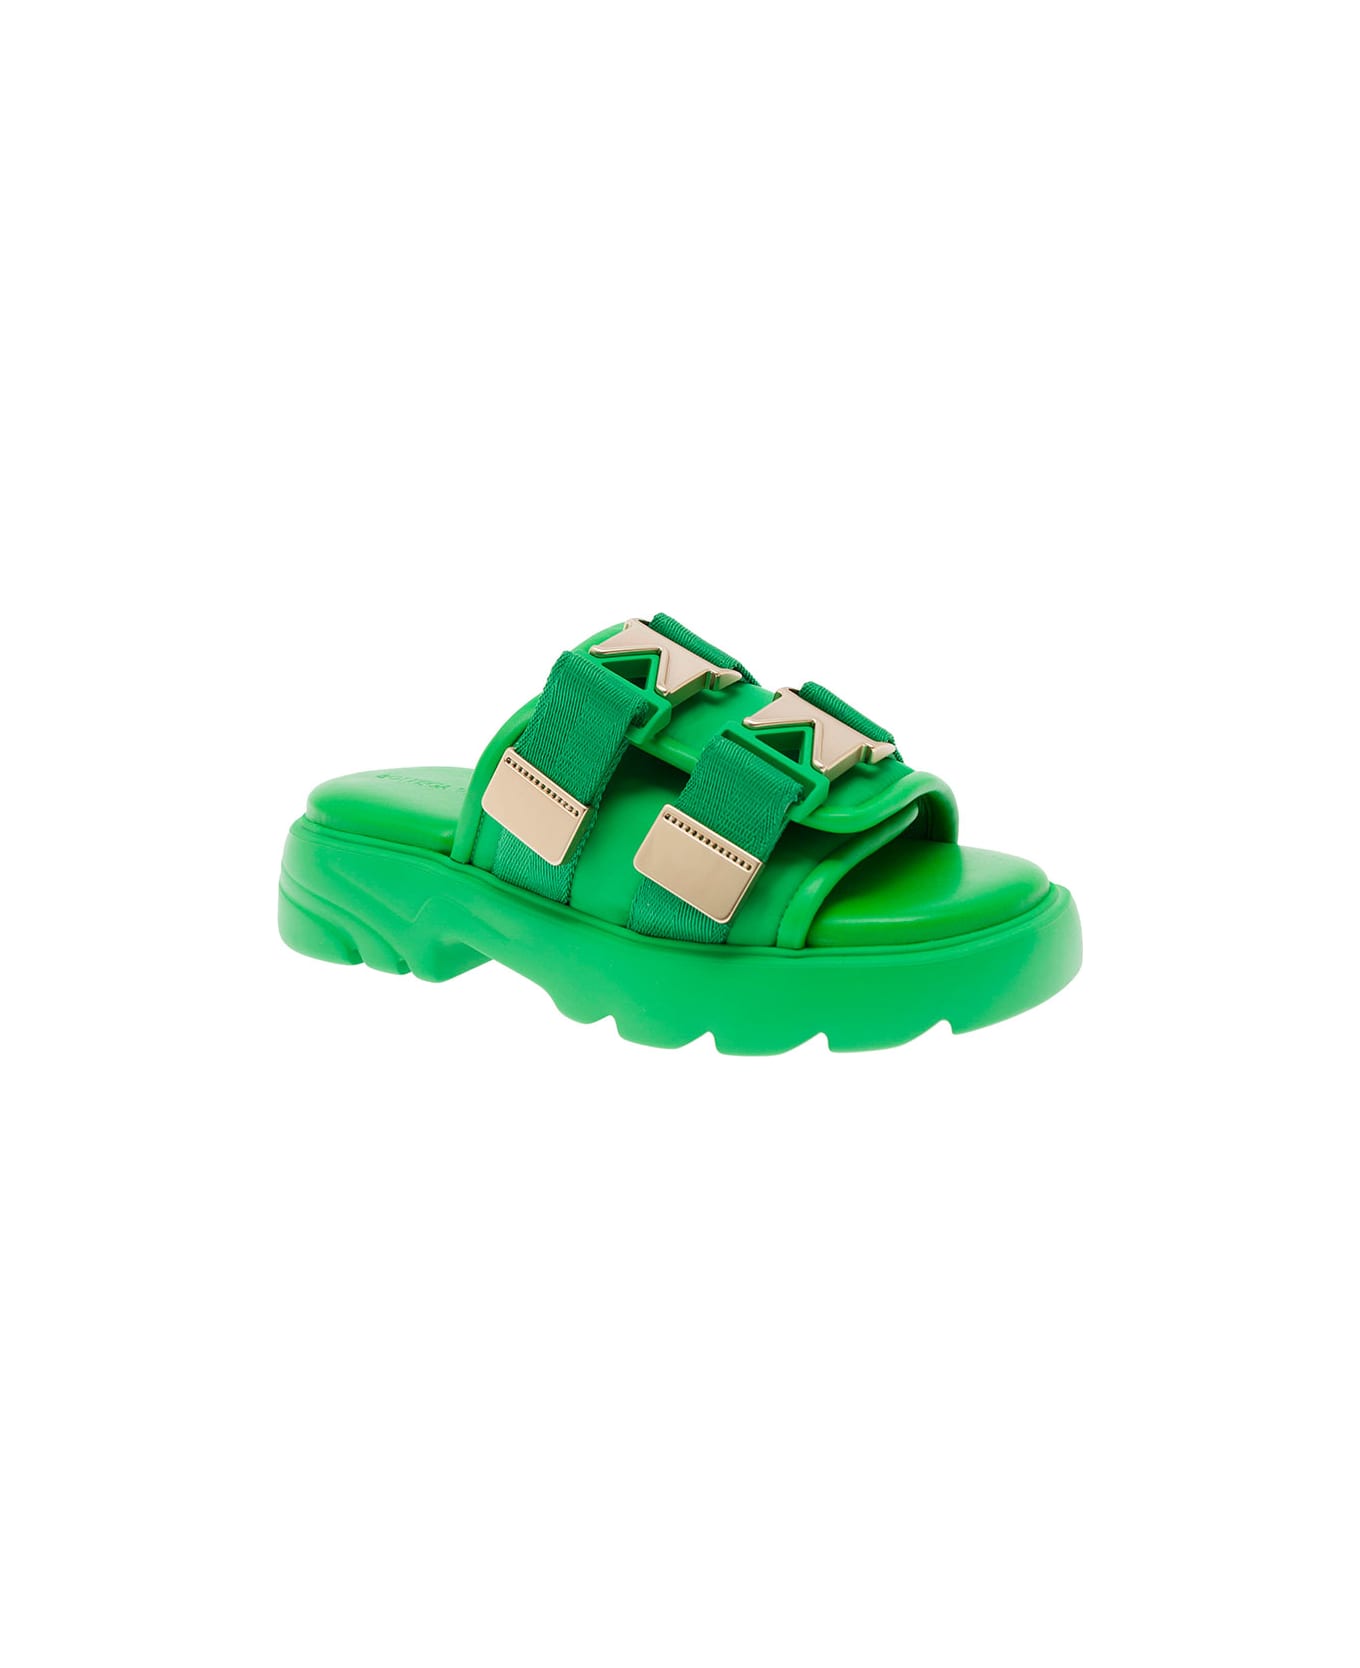 Bottega Veneta Falsh Green Leather  Sandals With Buckles Bottega Veneta Woman - Green